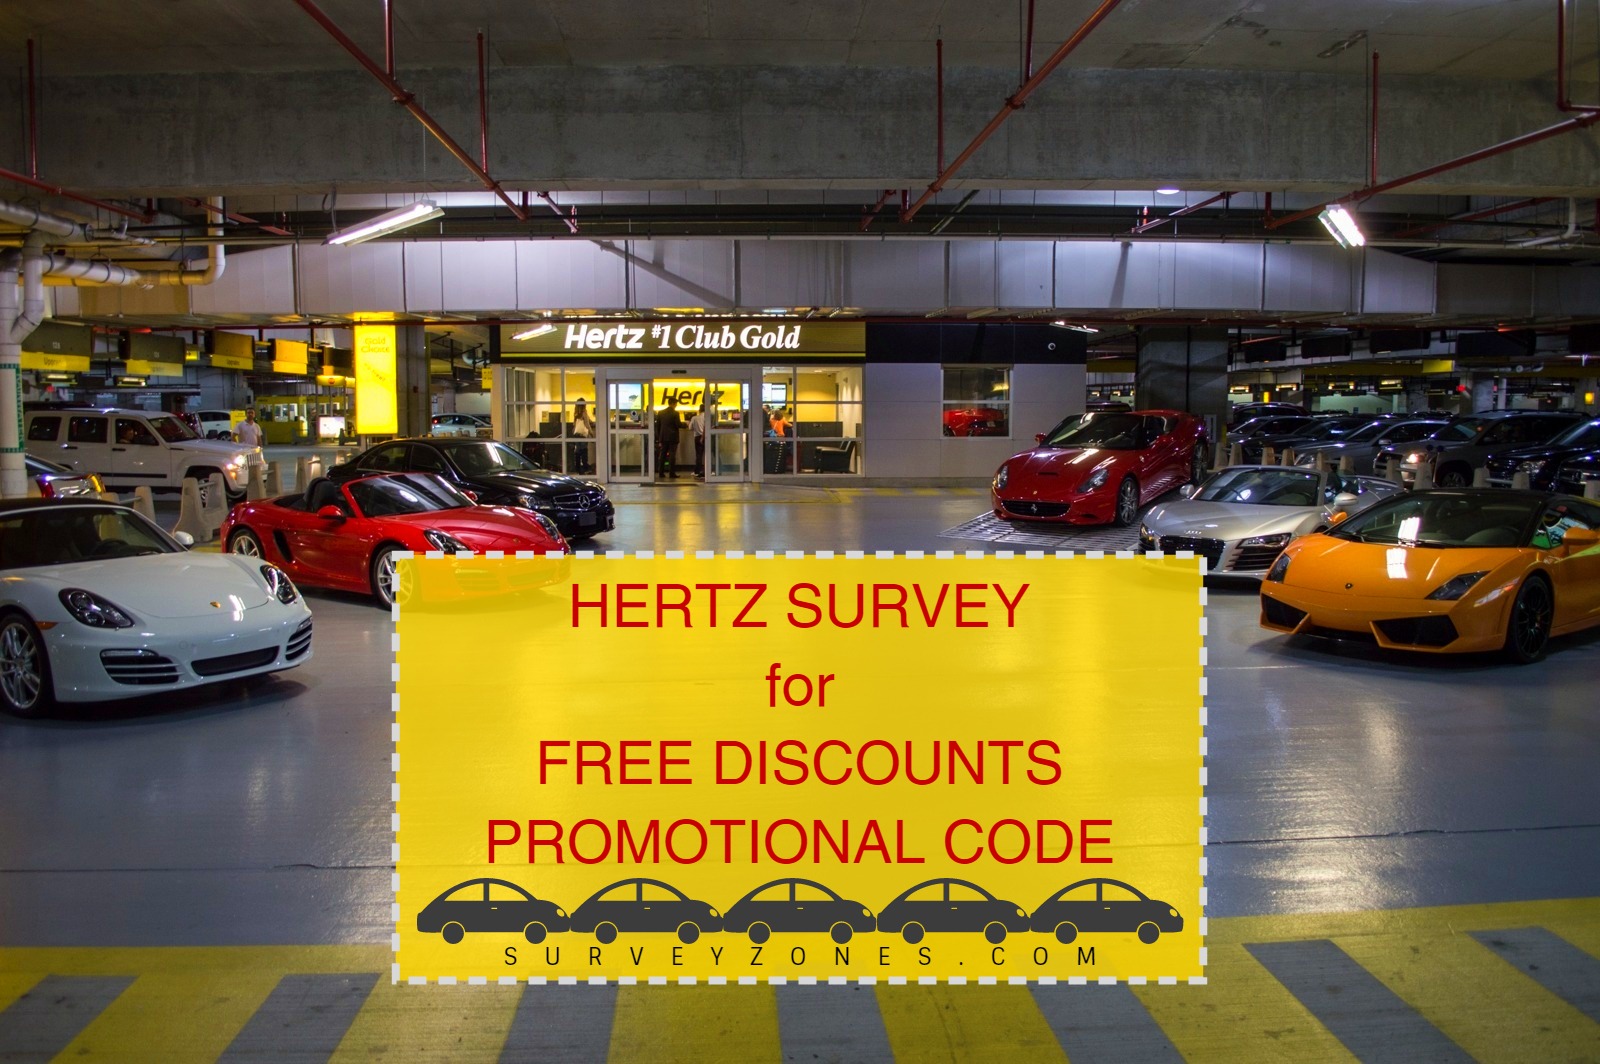 Hertz Survey code